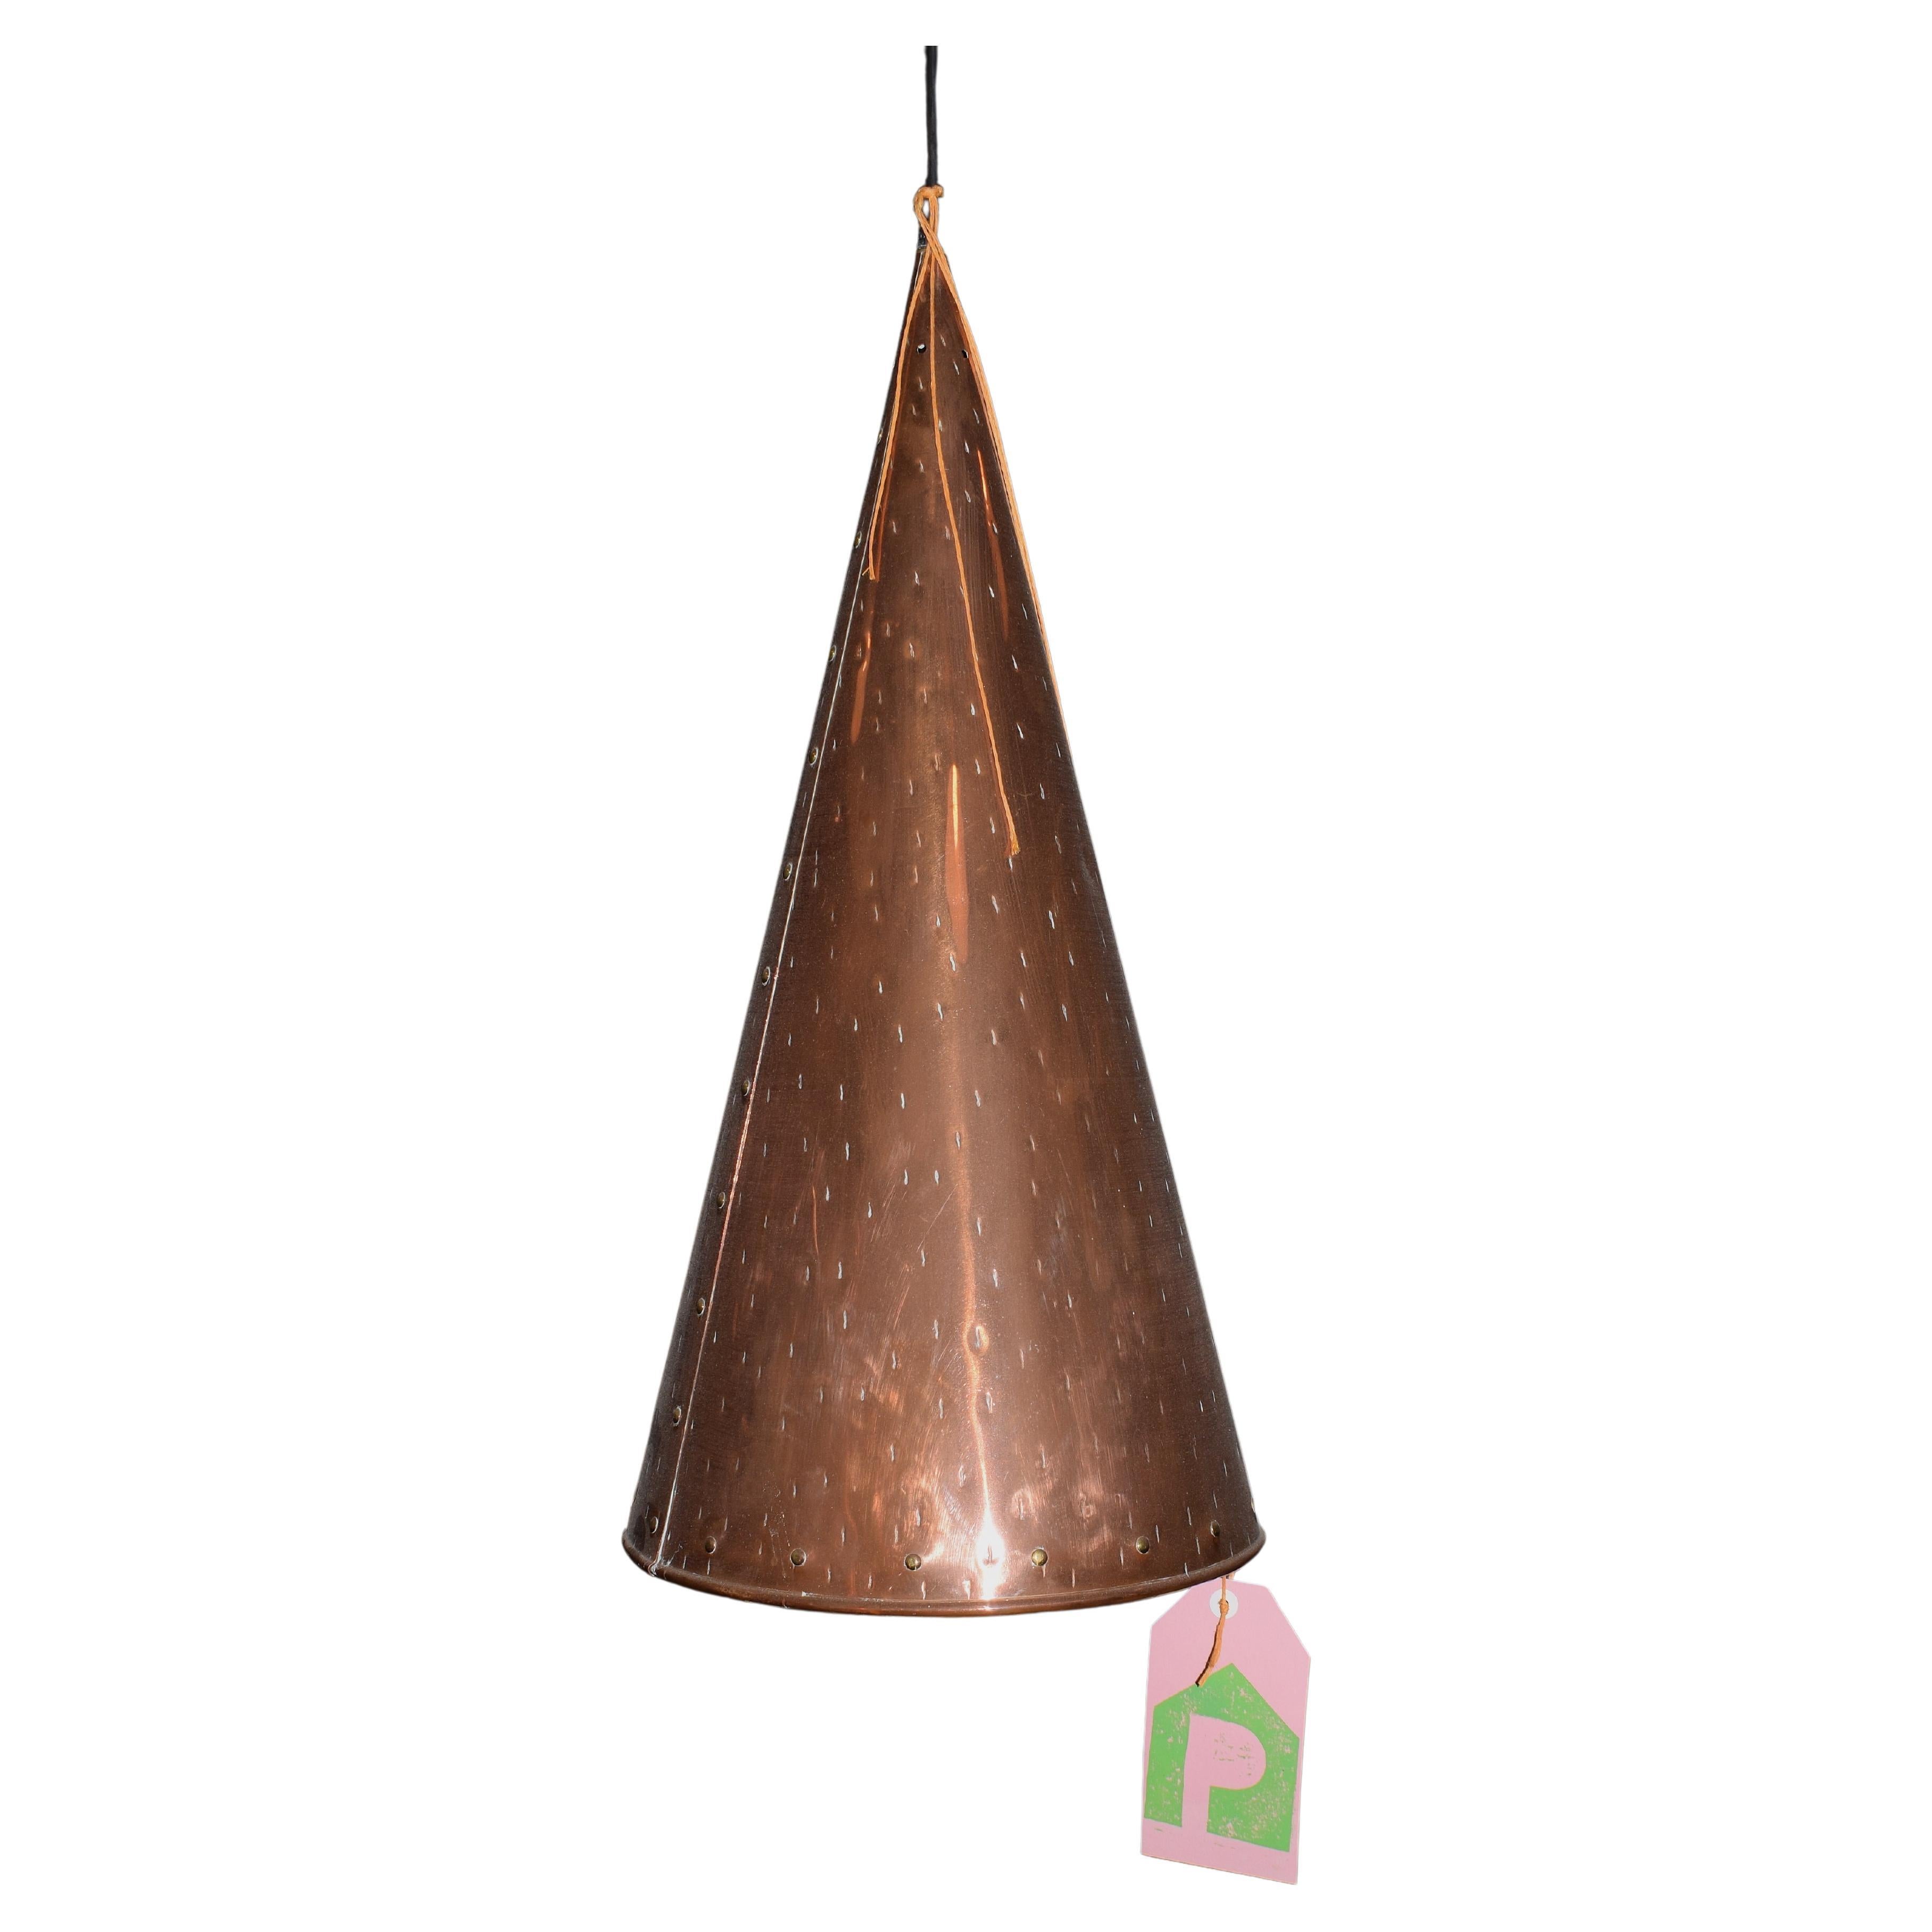 Scandinavian Brutalist Copper Conical Pendant Lamp by E.S. Horn Alestrup